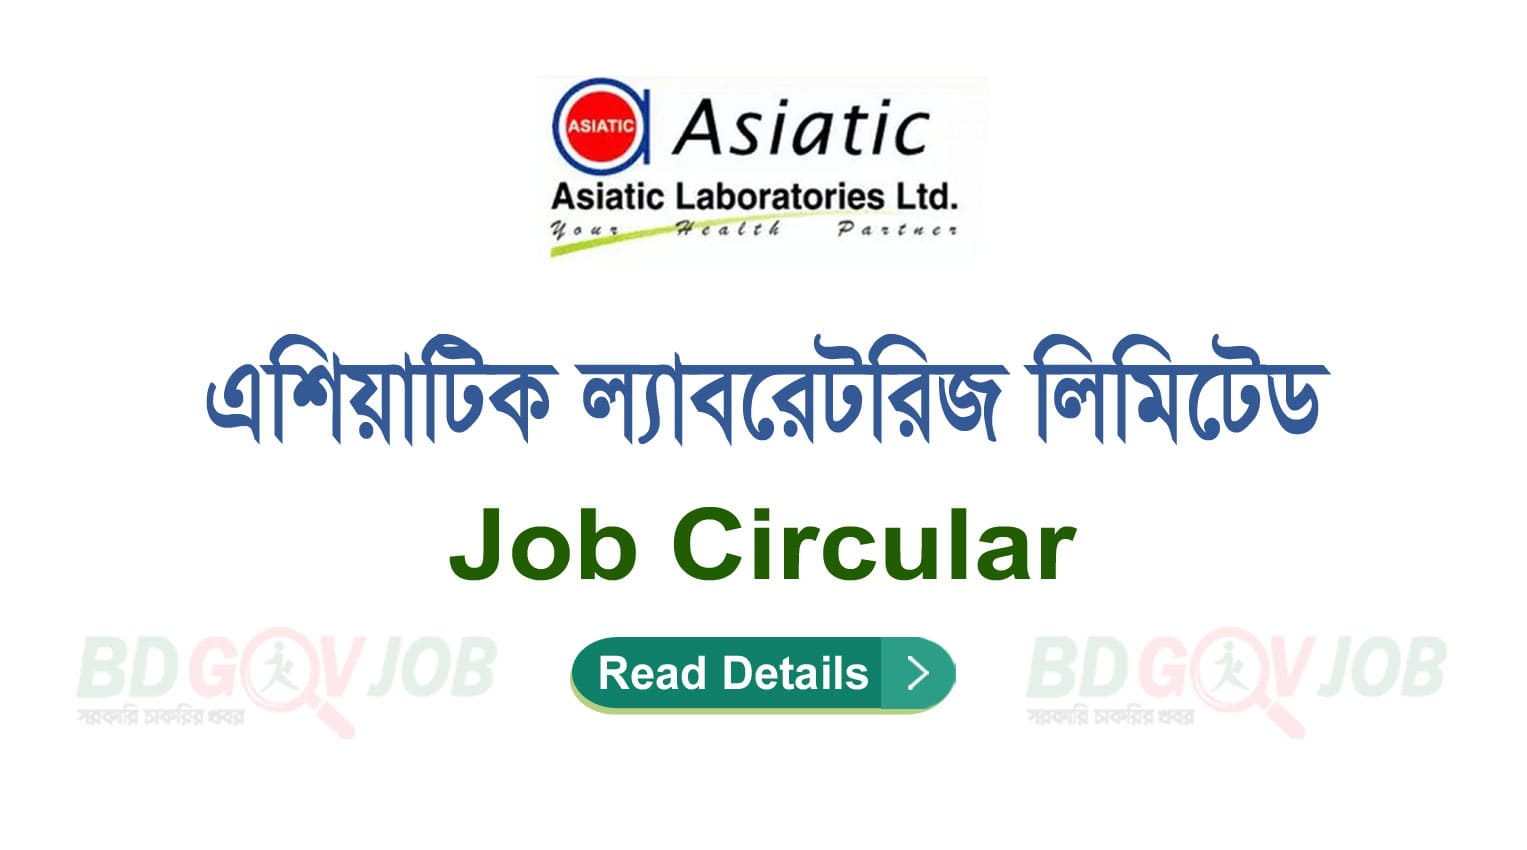 Asiatic Laboratories Ltd Job Circular